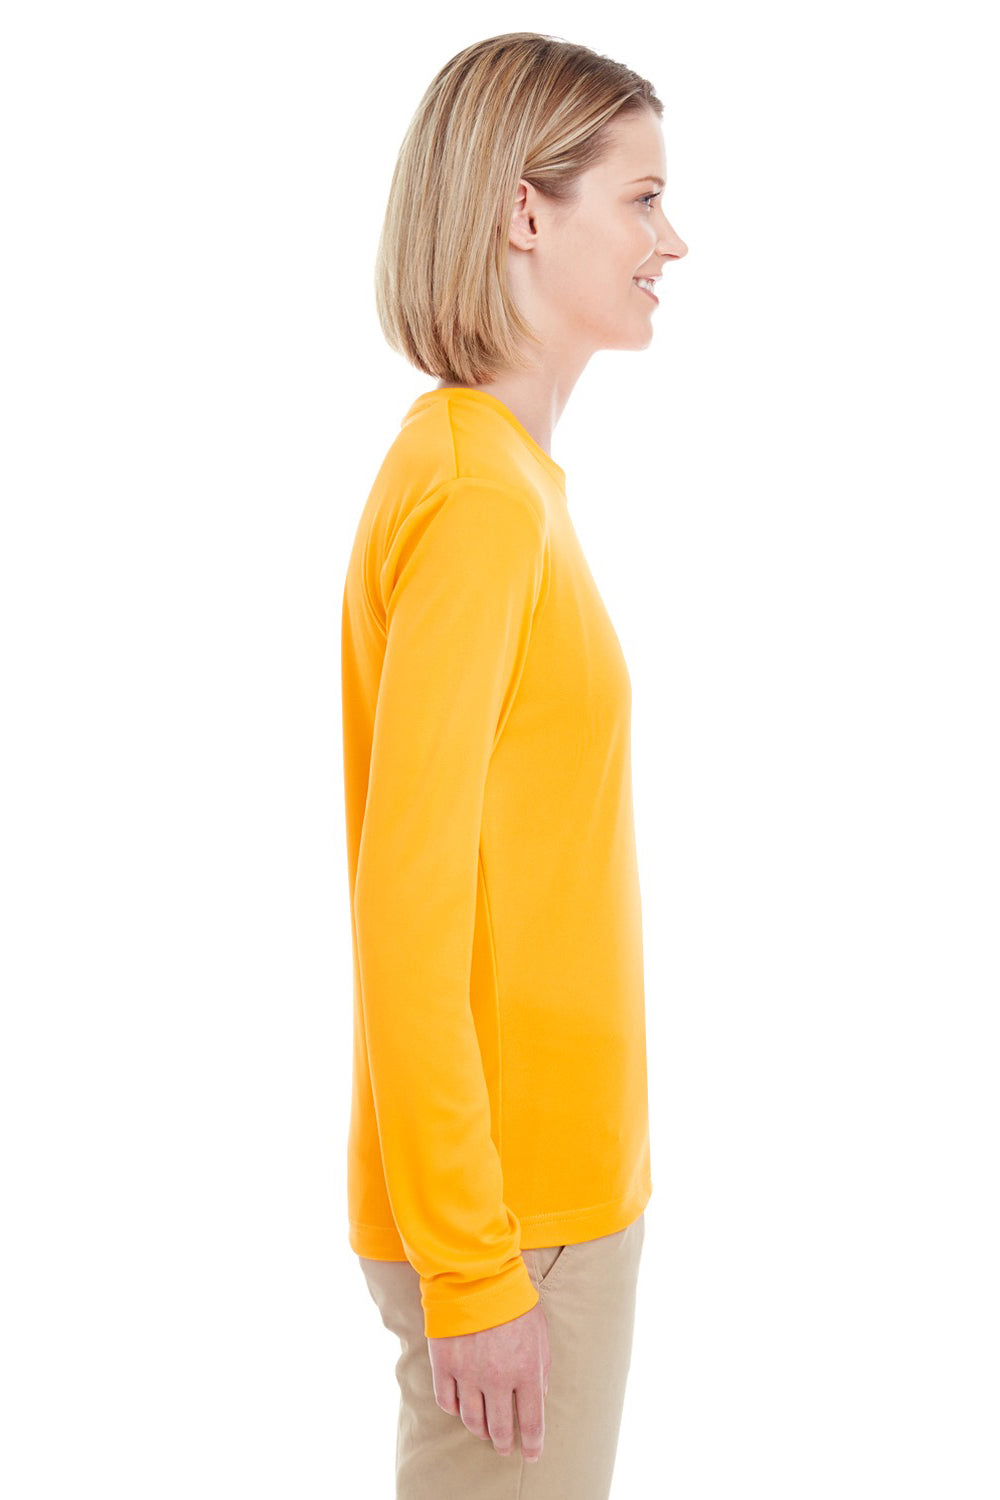 UltraClub 8622W Womens Cool & Dry Performance Moisture Wicking Long Sleeve Crewneck T-Shirt Gold Side